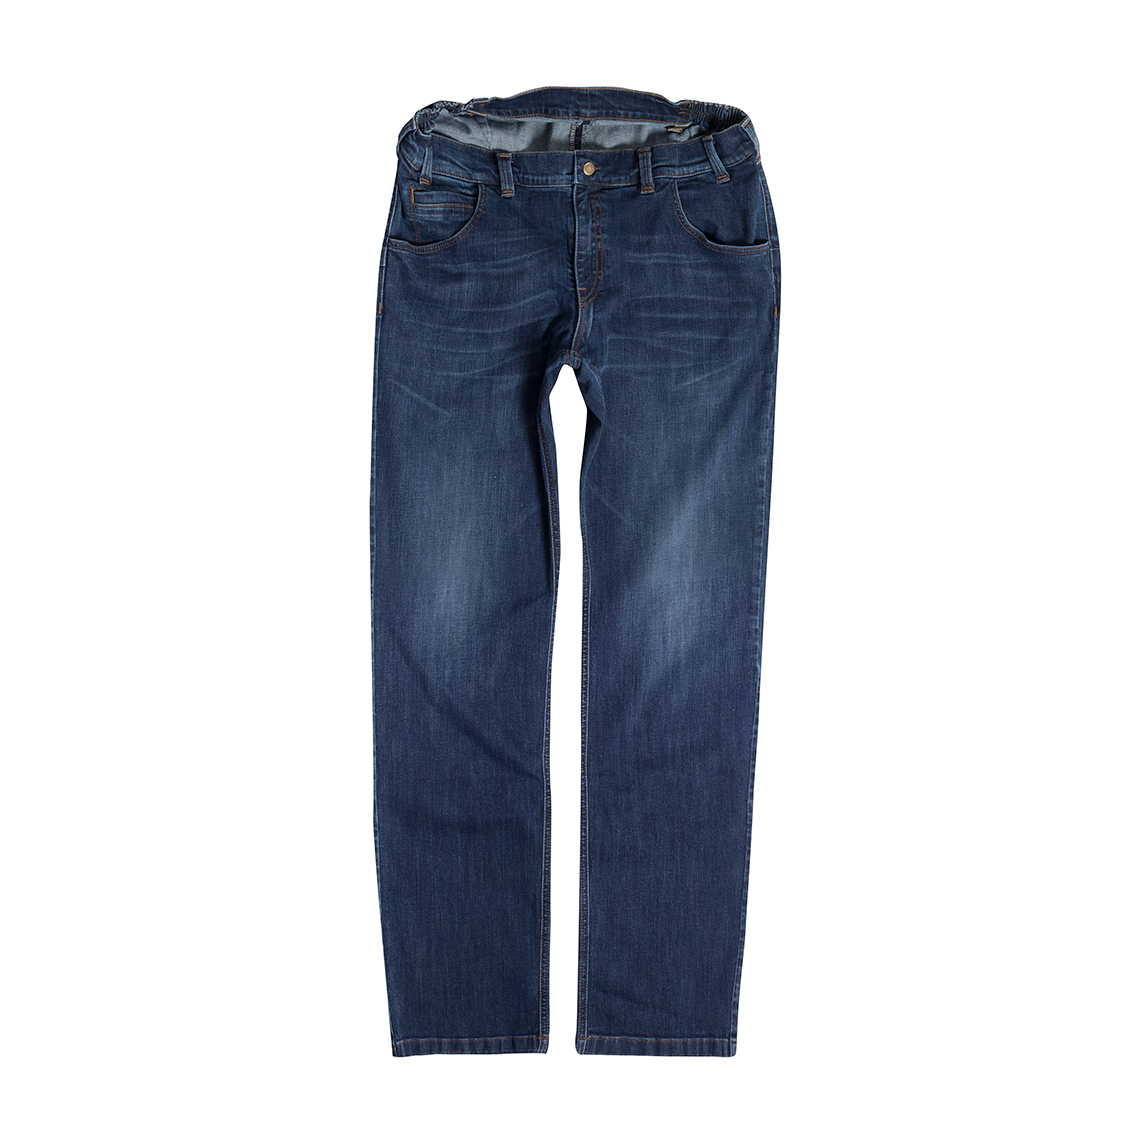 Herren Jeans  Fashion washed, blau MIKE 10391 59